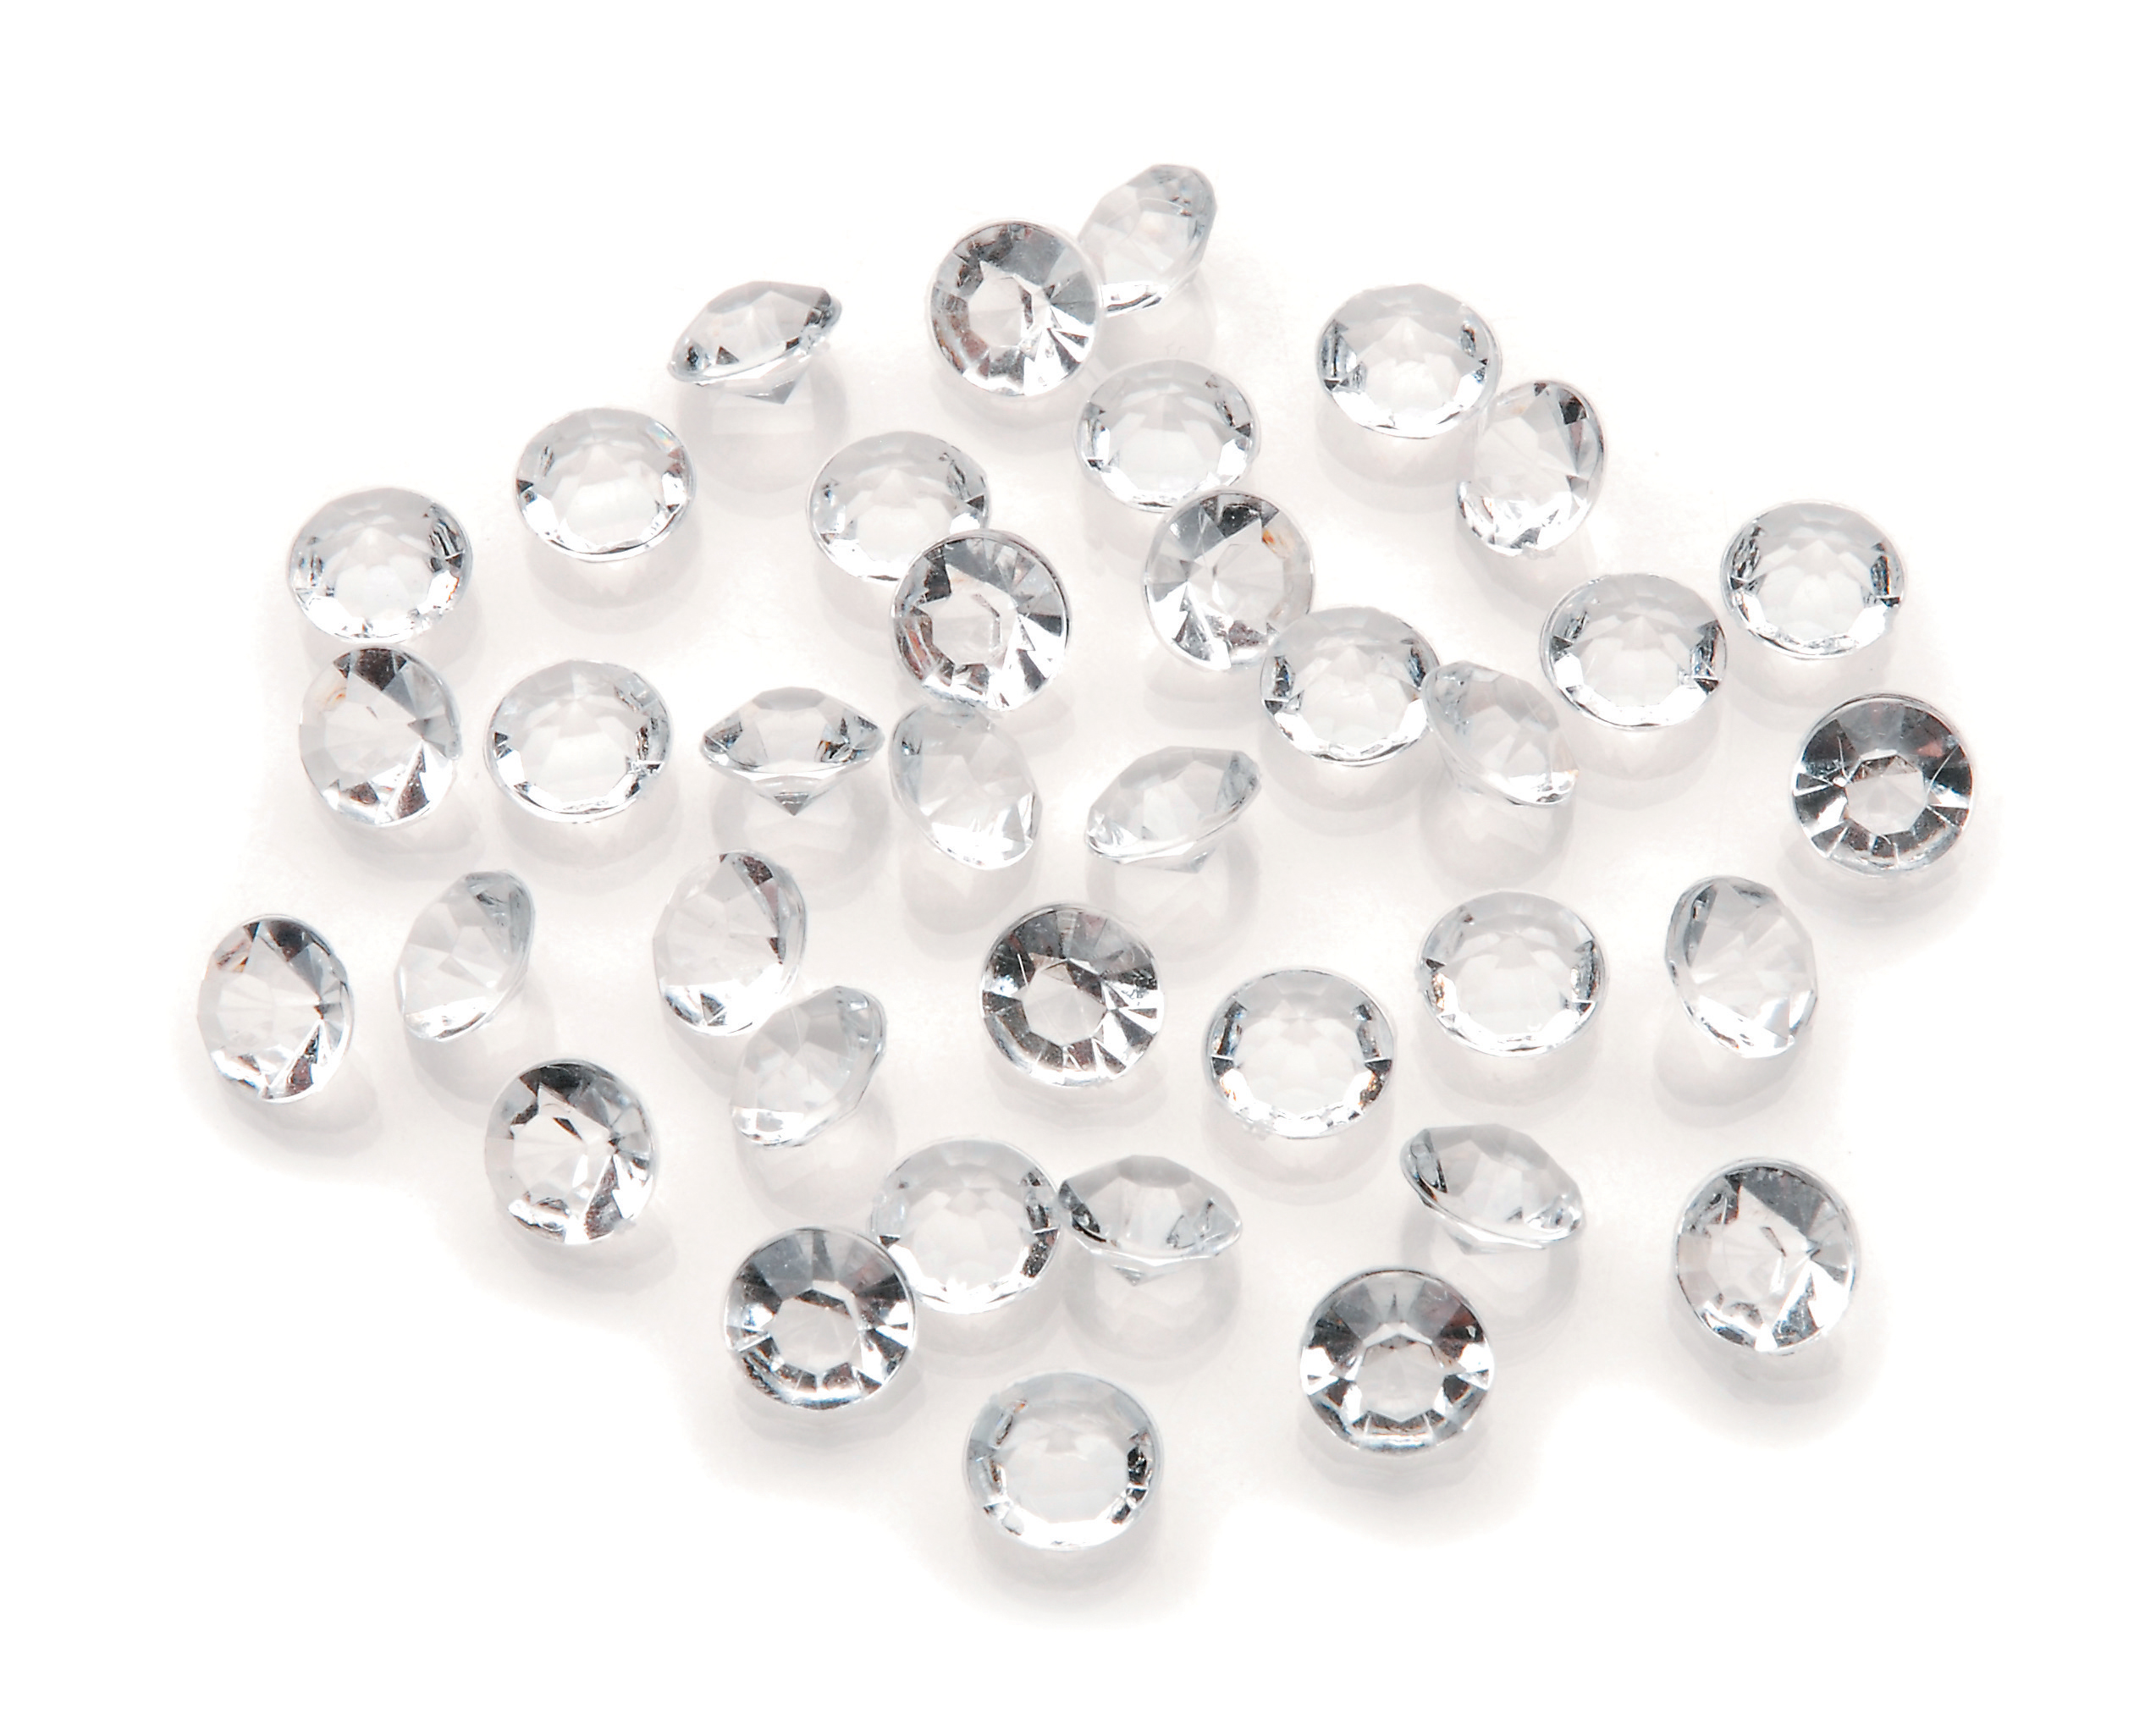 Darice Clear Diamond Ice Gems, 4 Carat, 800 Pieces - image 1 of 5